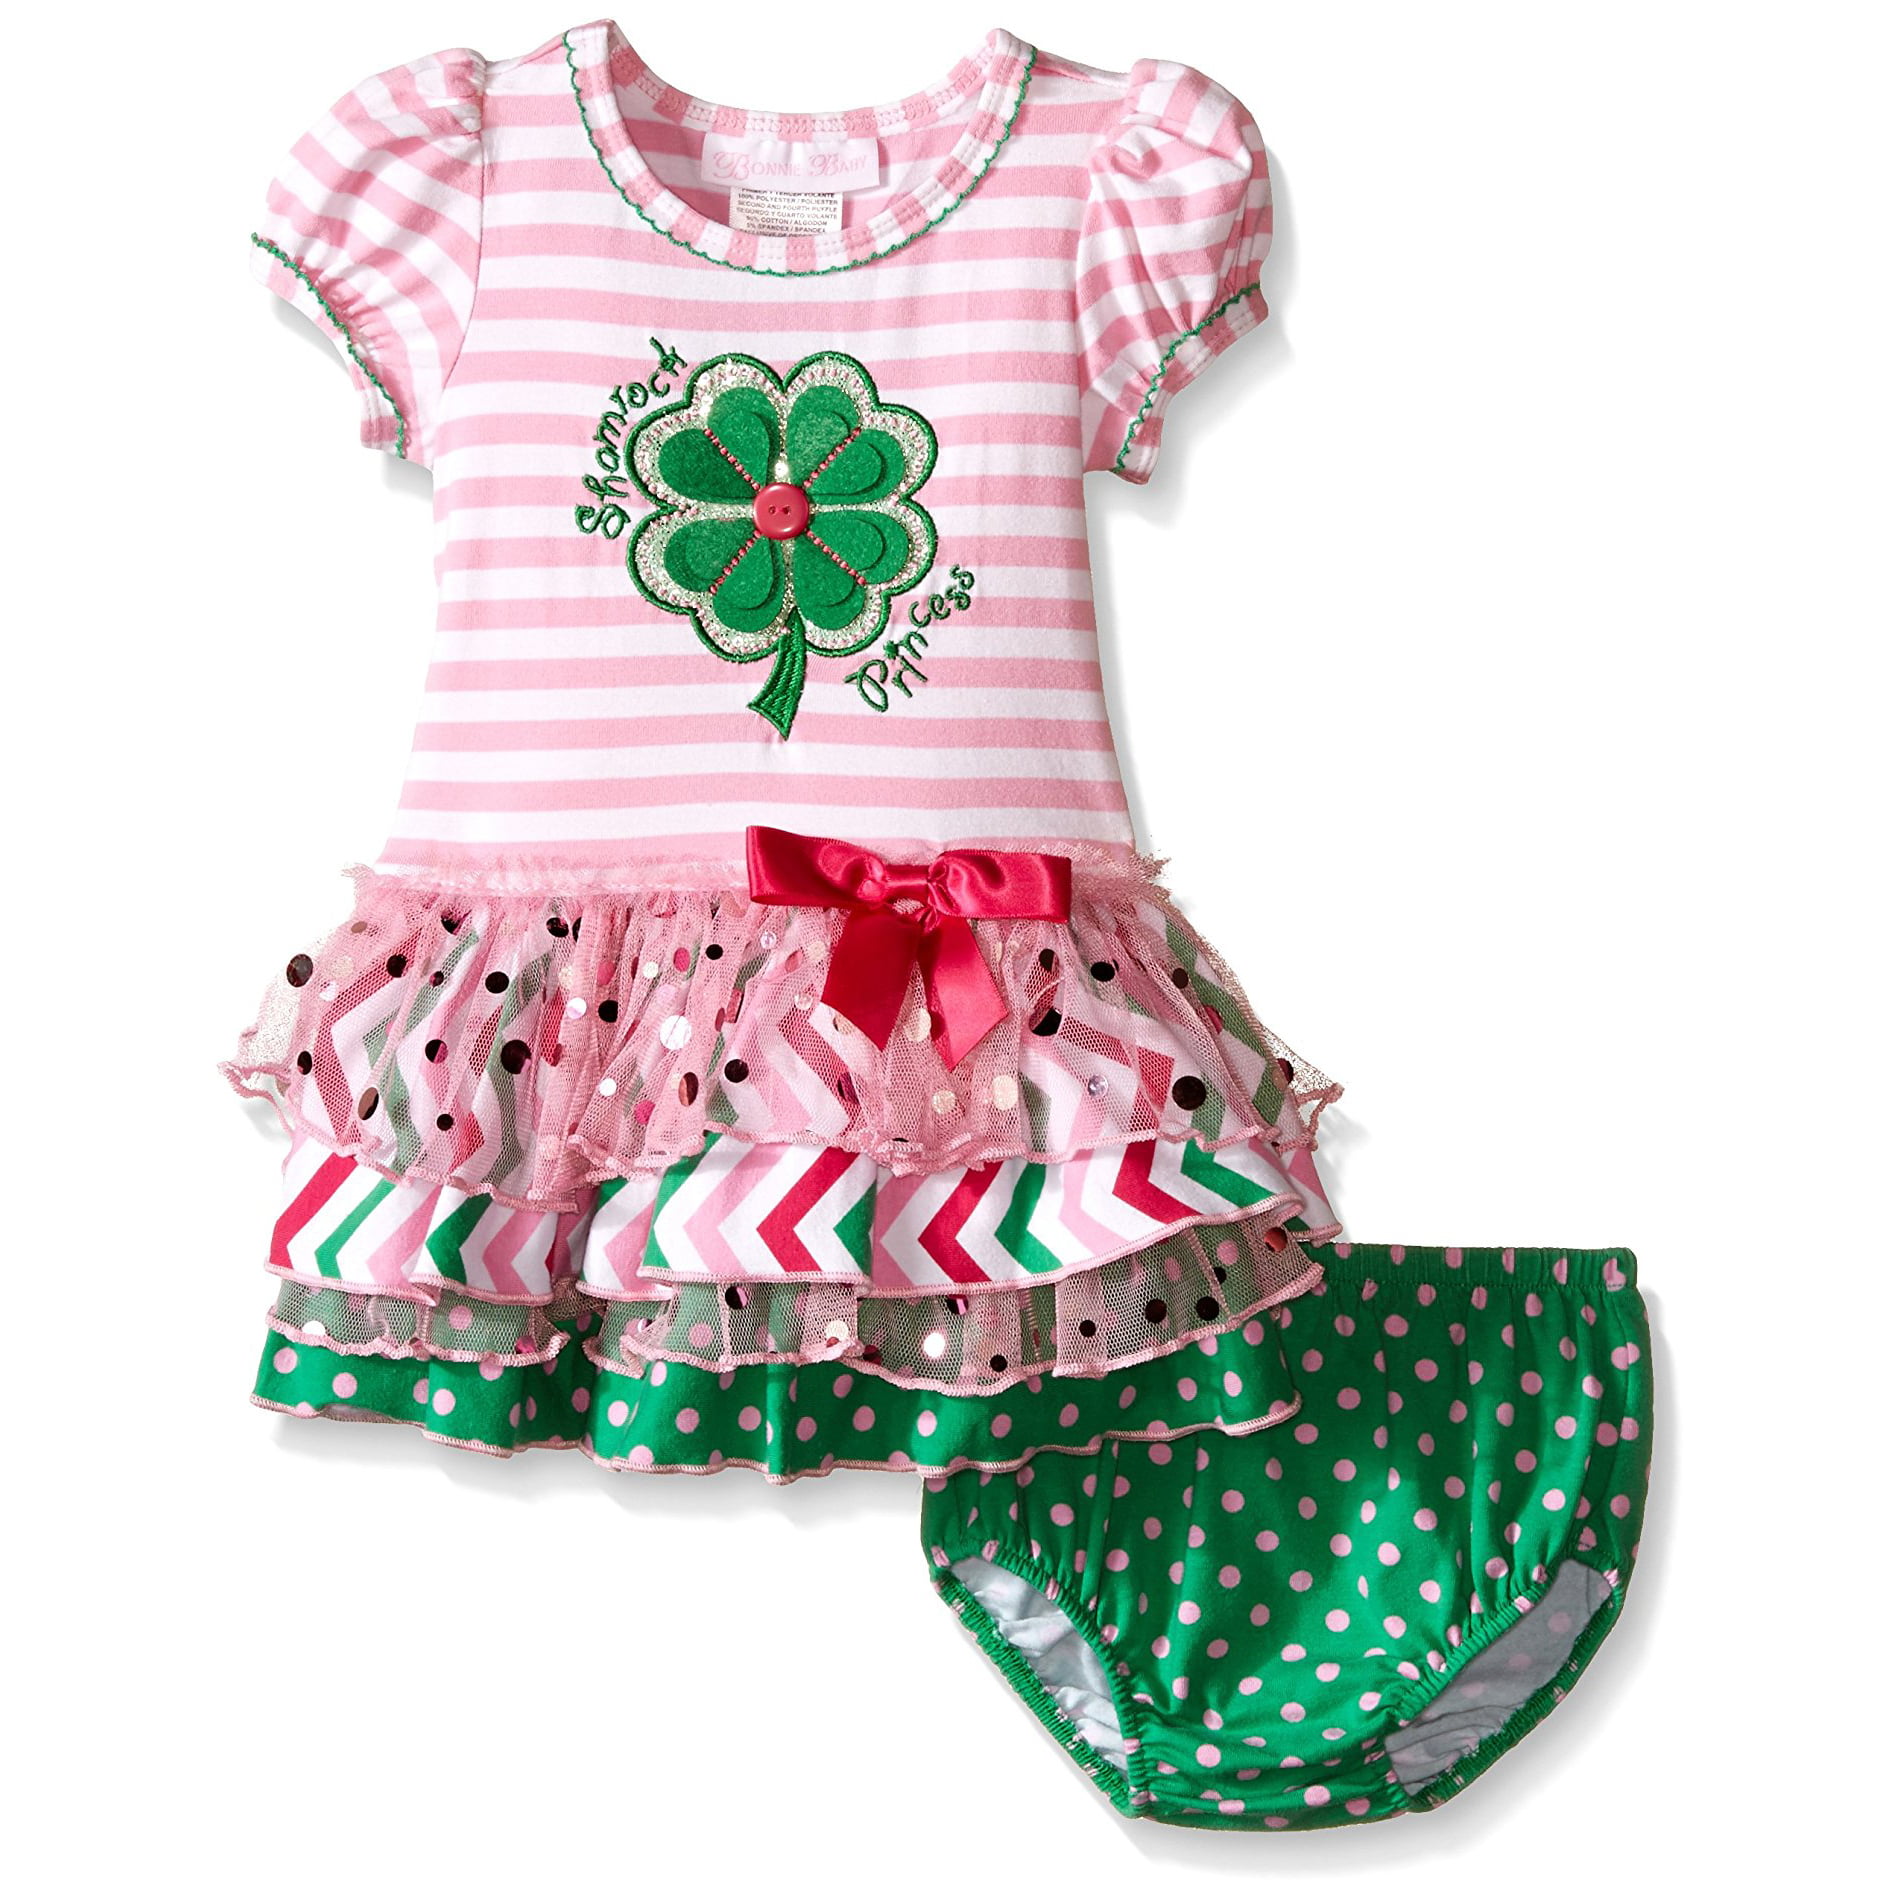 Bonnie Baby Baby Girls Stripe Knit To Multi Tiered Skirt